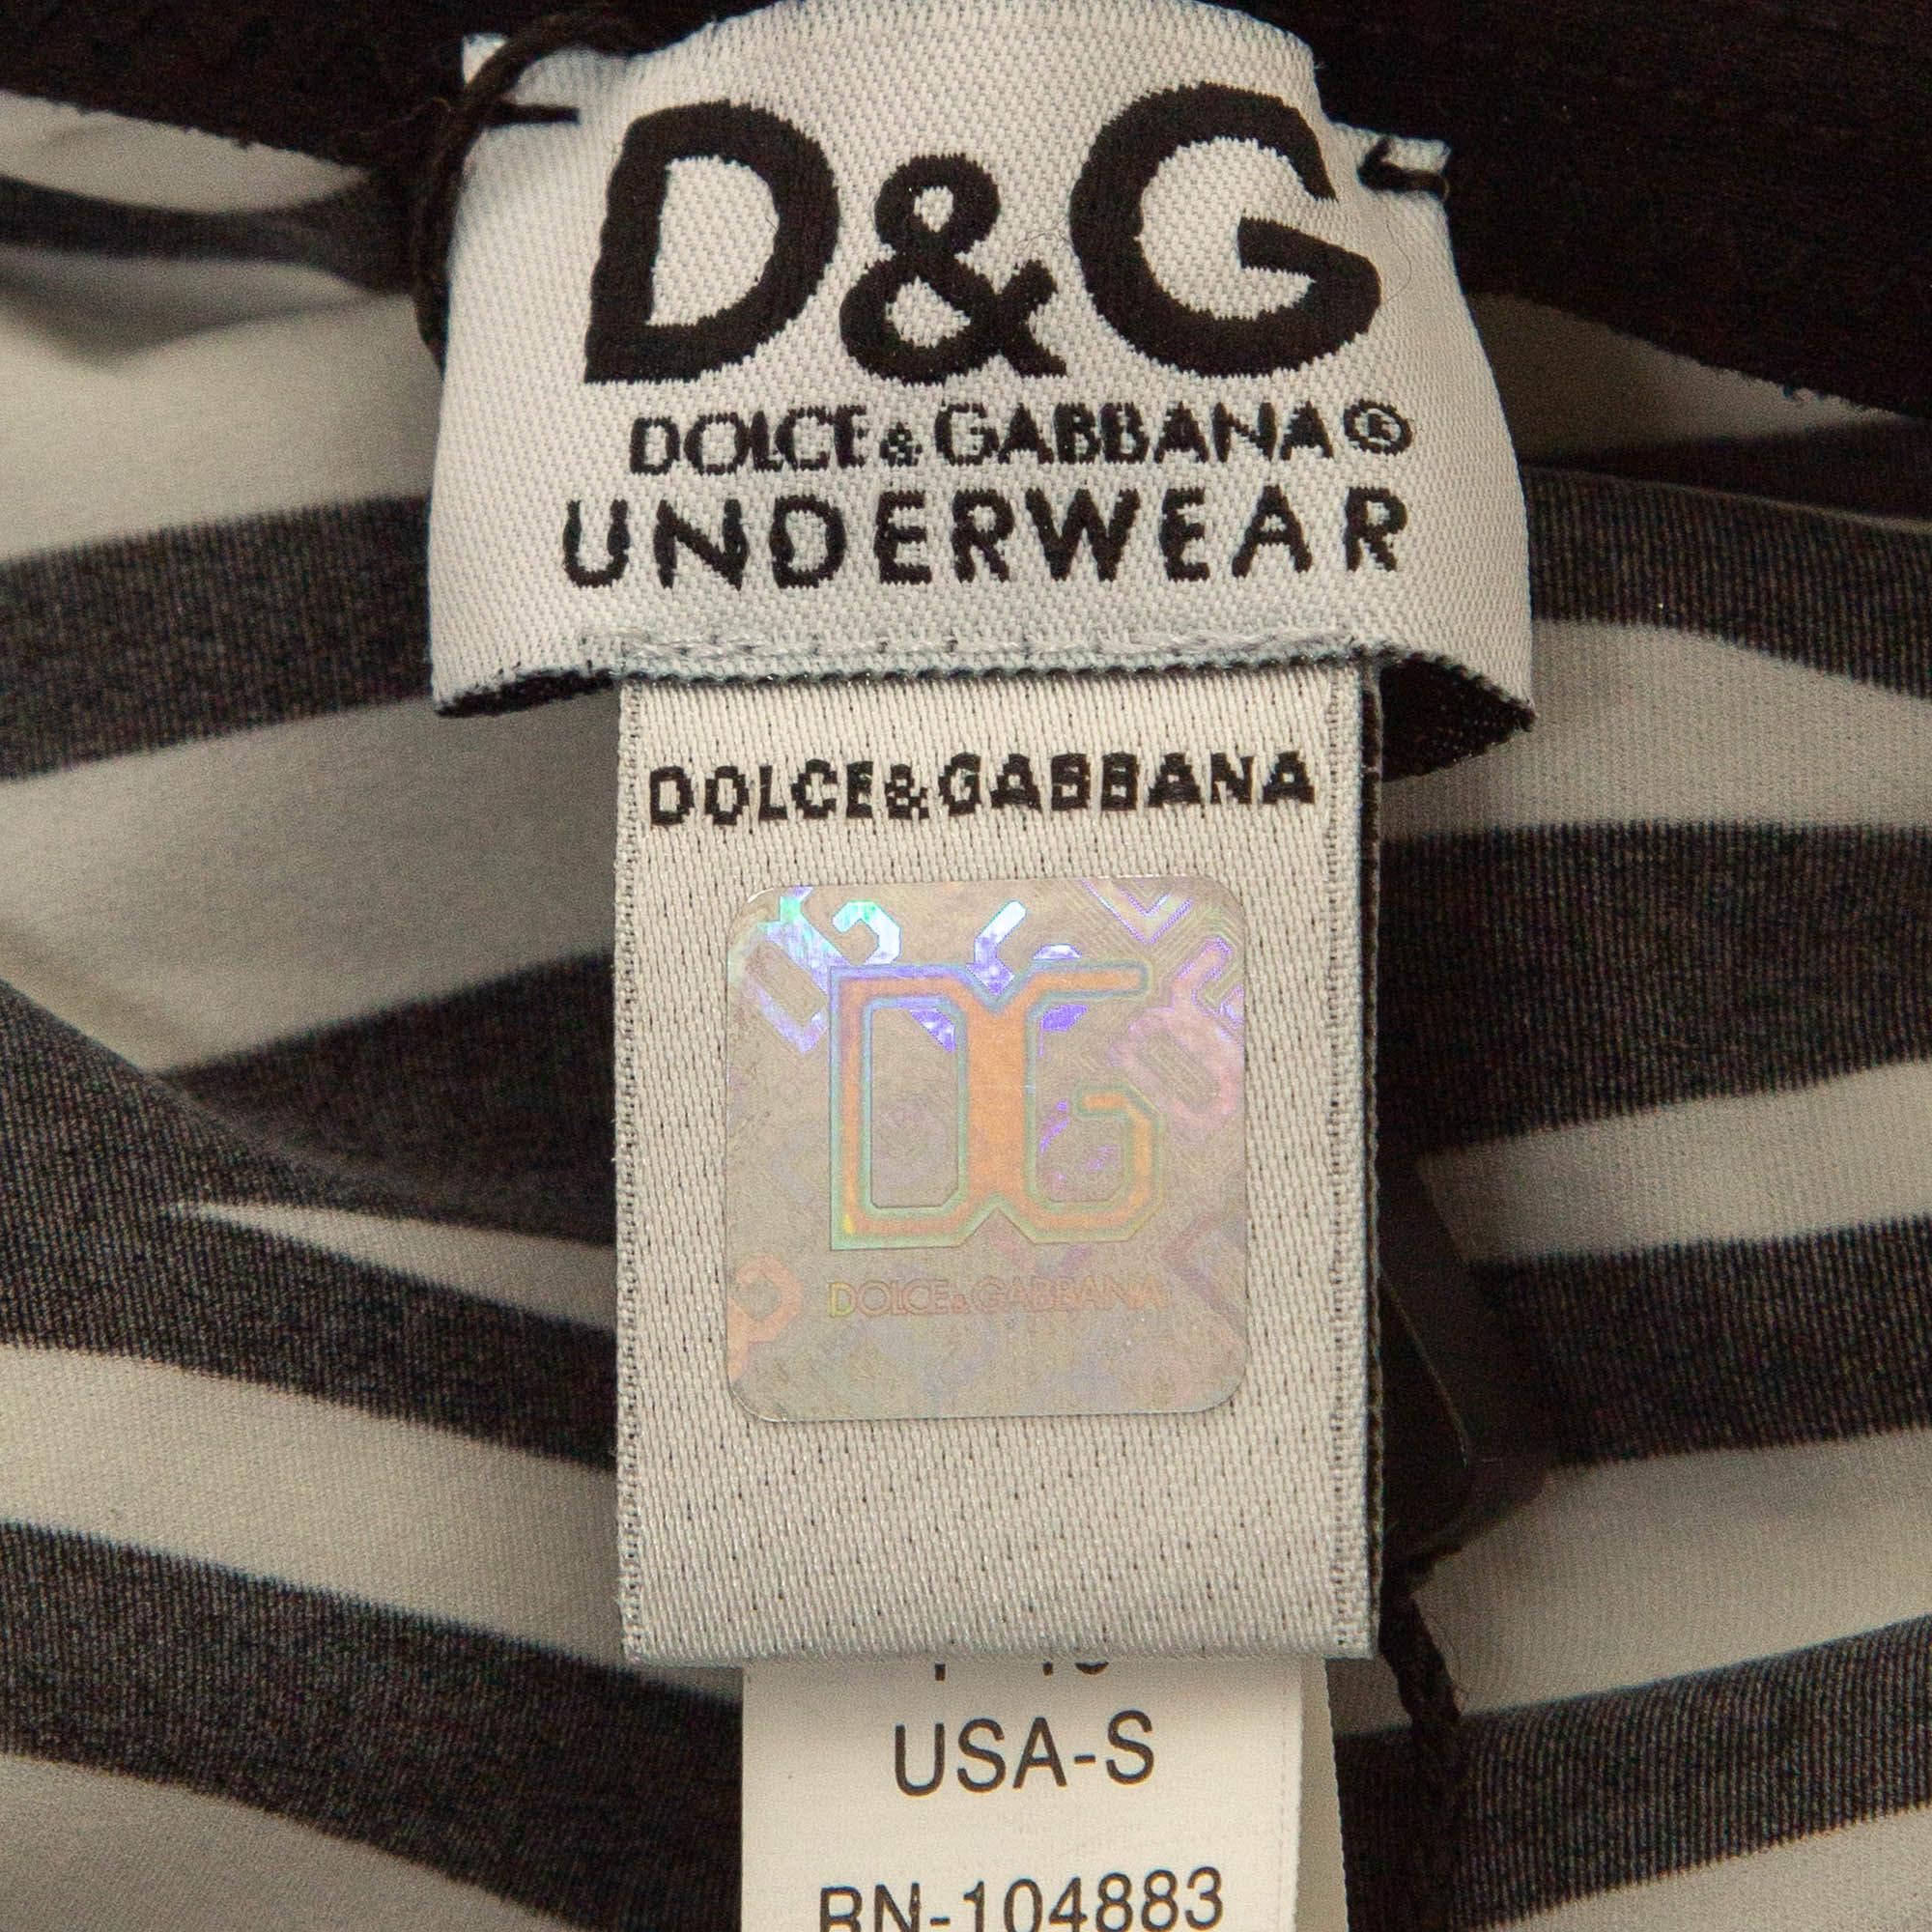 Women's Dolce & Gabbana Under Wear Black/White Print Stretch Nylon Strappy Top M